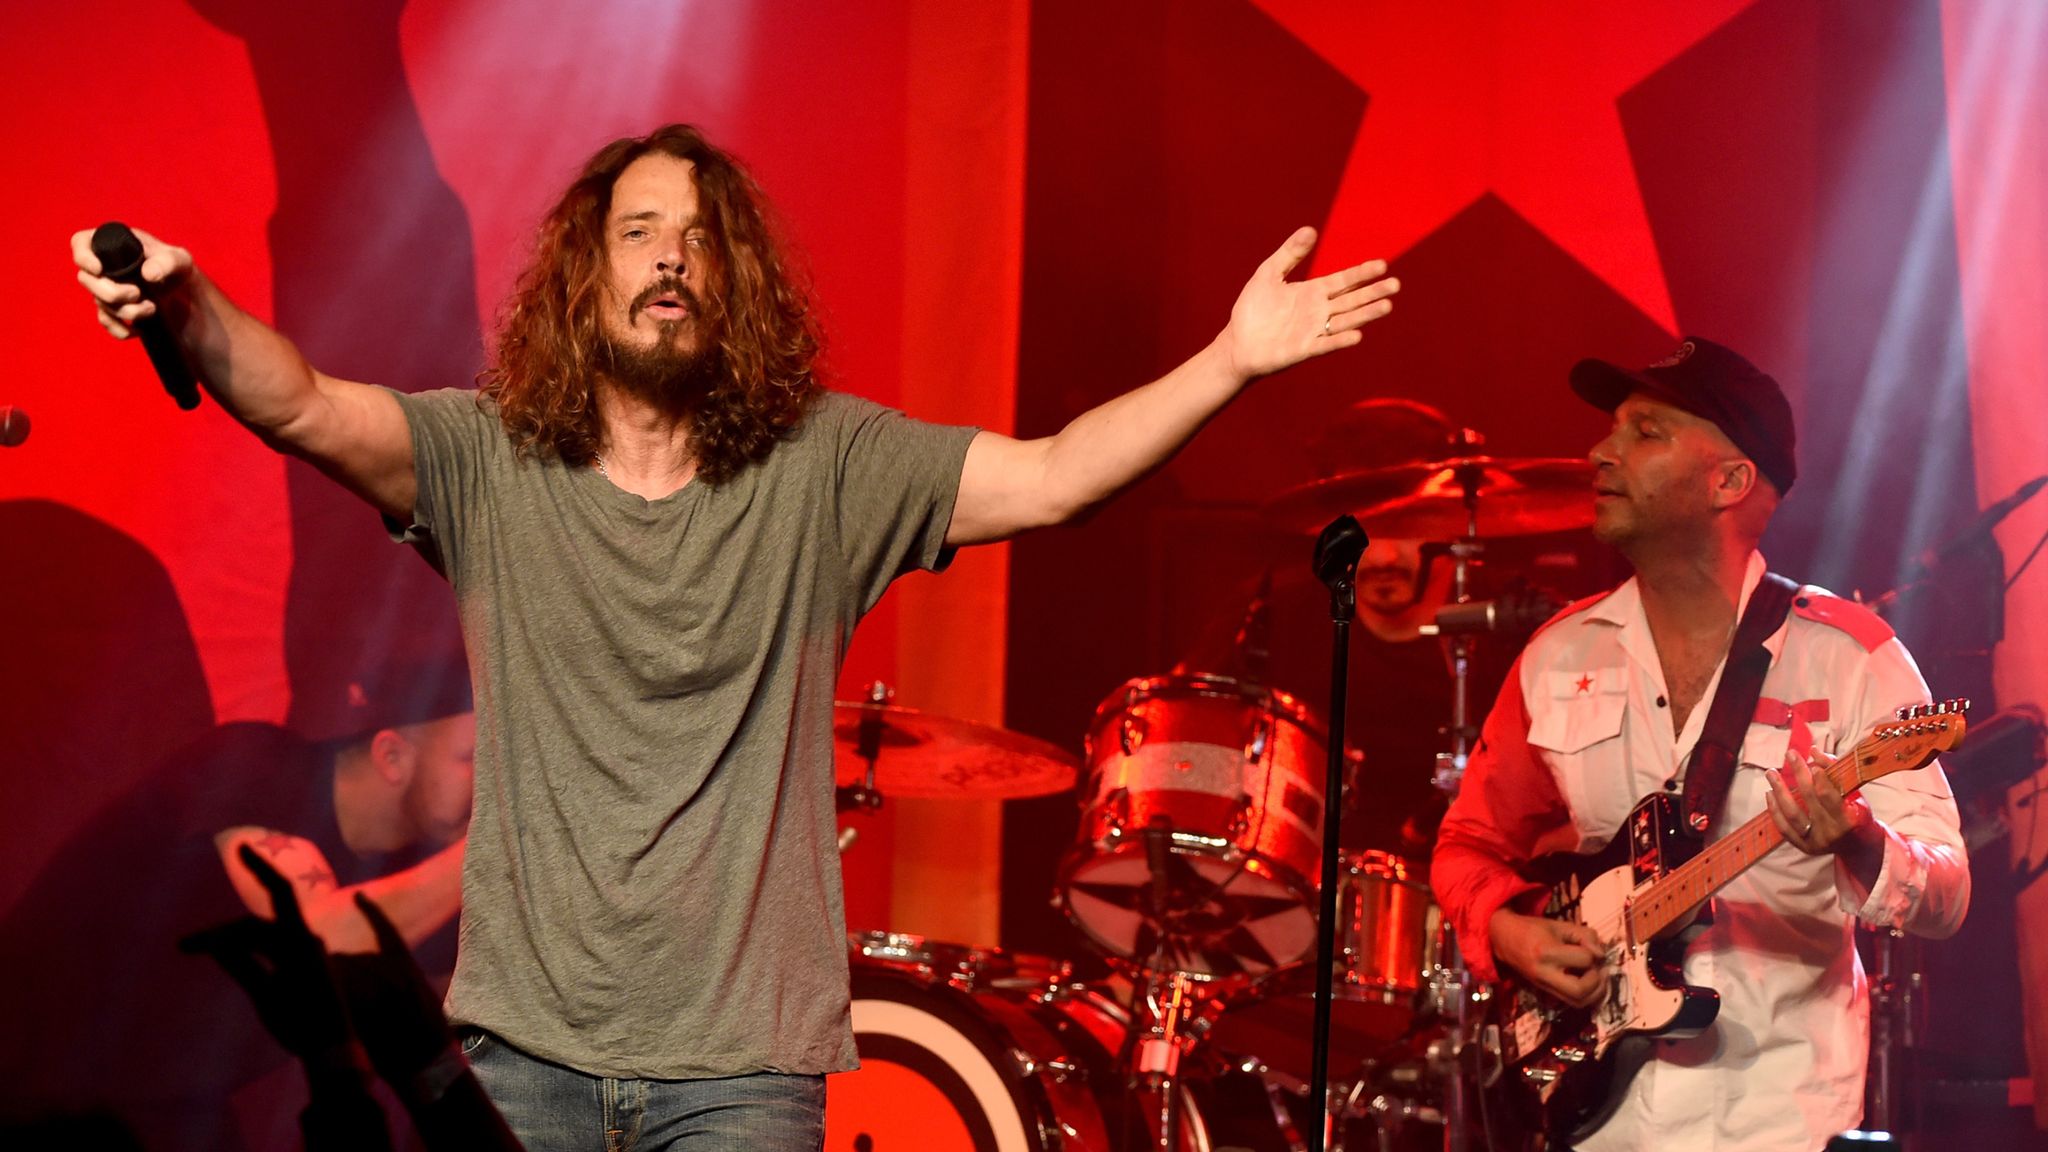 Chris Cornell Soundgarden And Audioslave Rocker Dead At 52 Ents Arts News Sky News